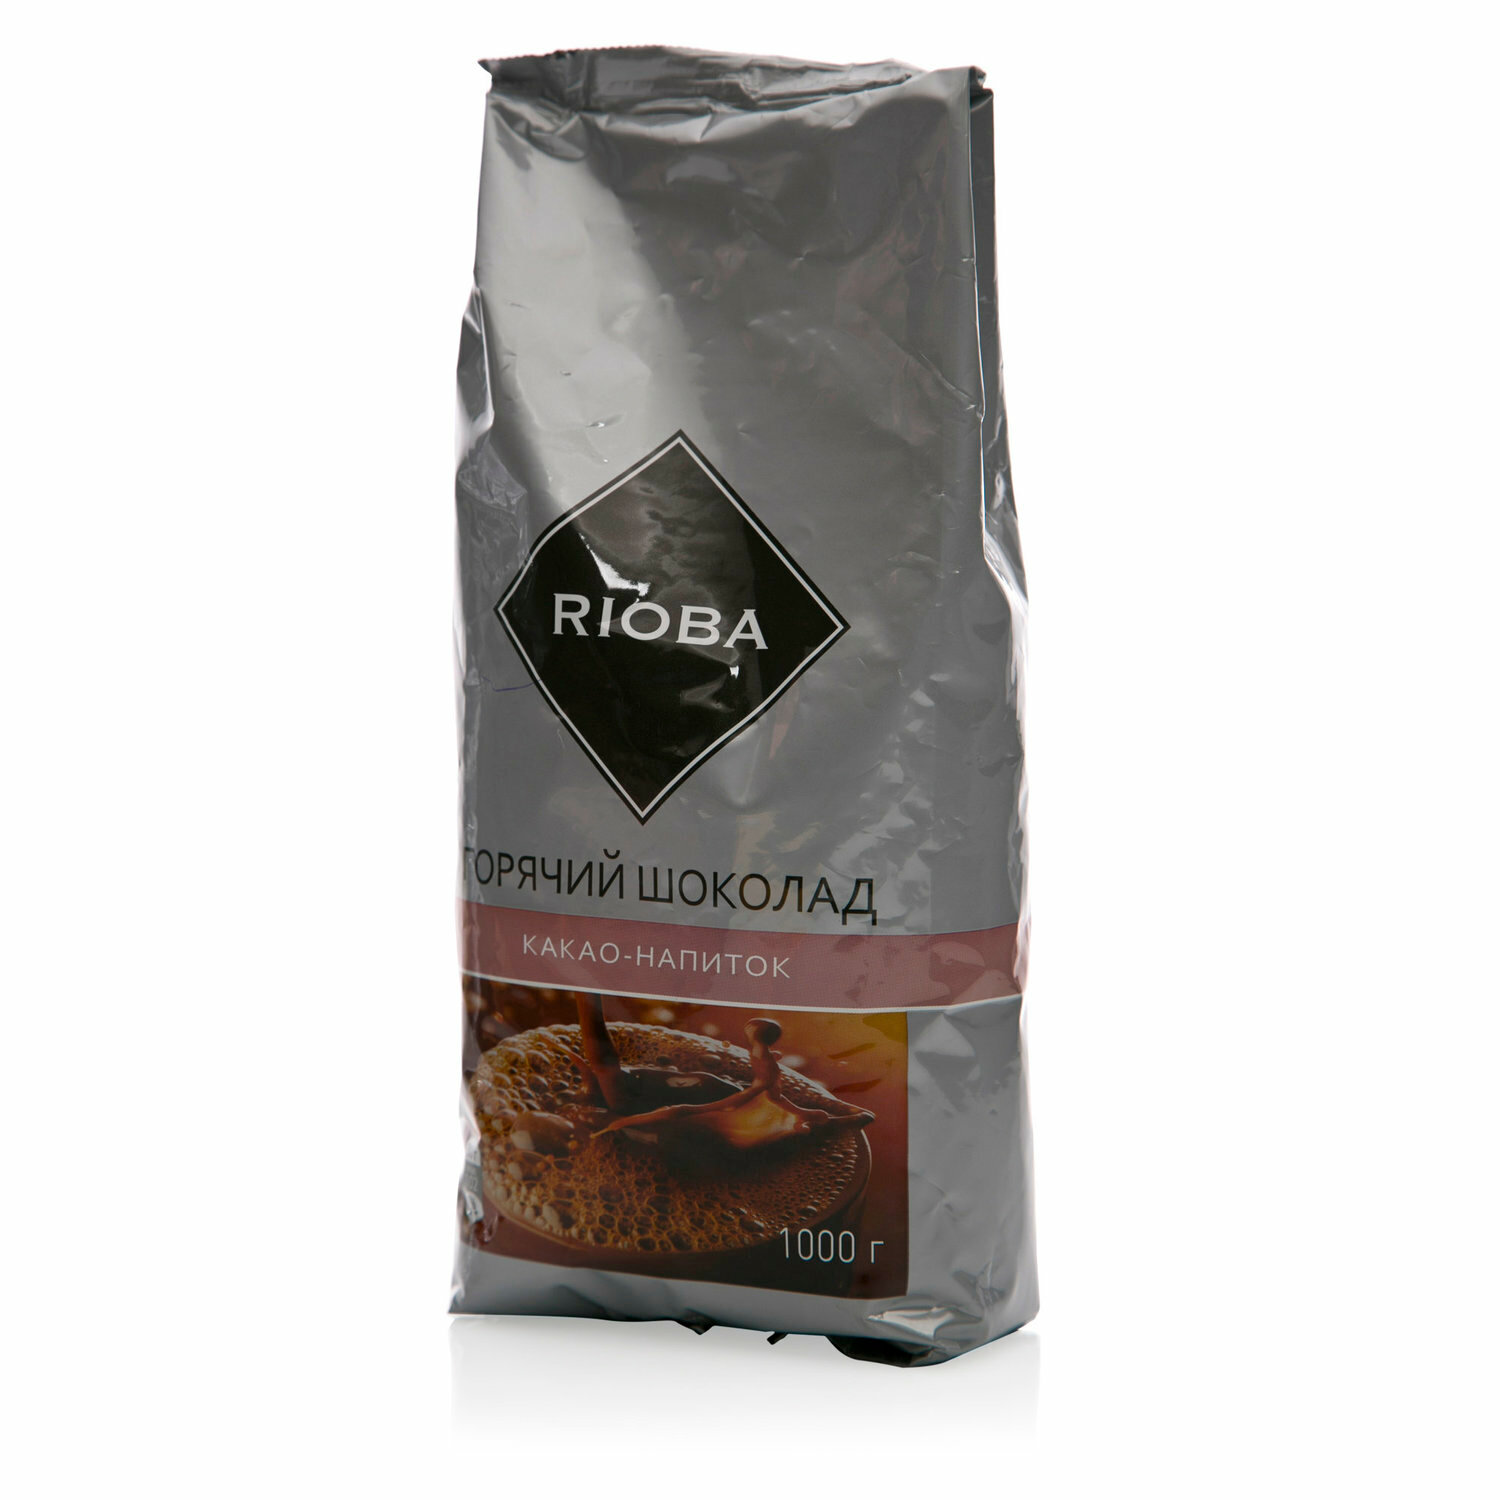 Какао-напиток горячий шоколад ТМ Rioba (Риоба)